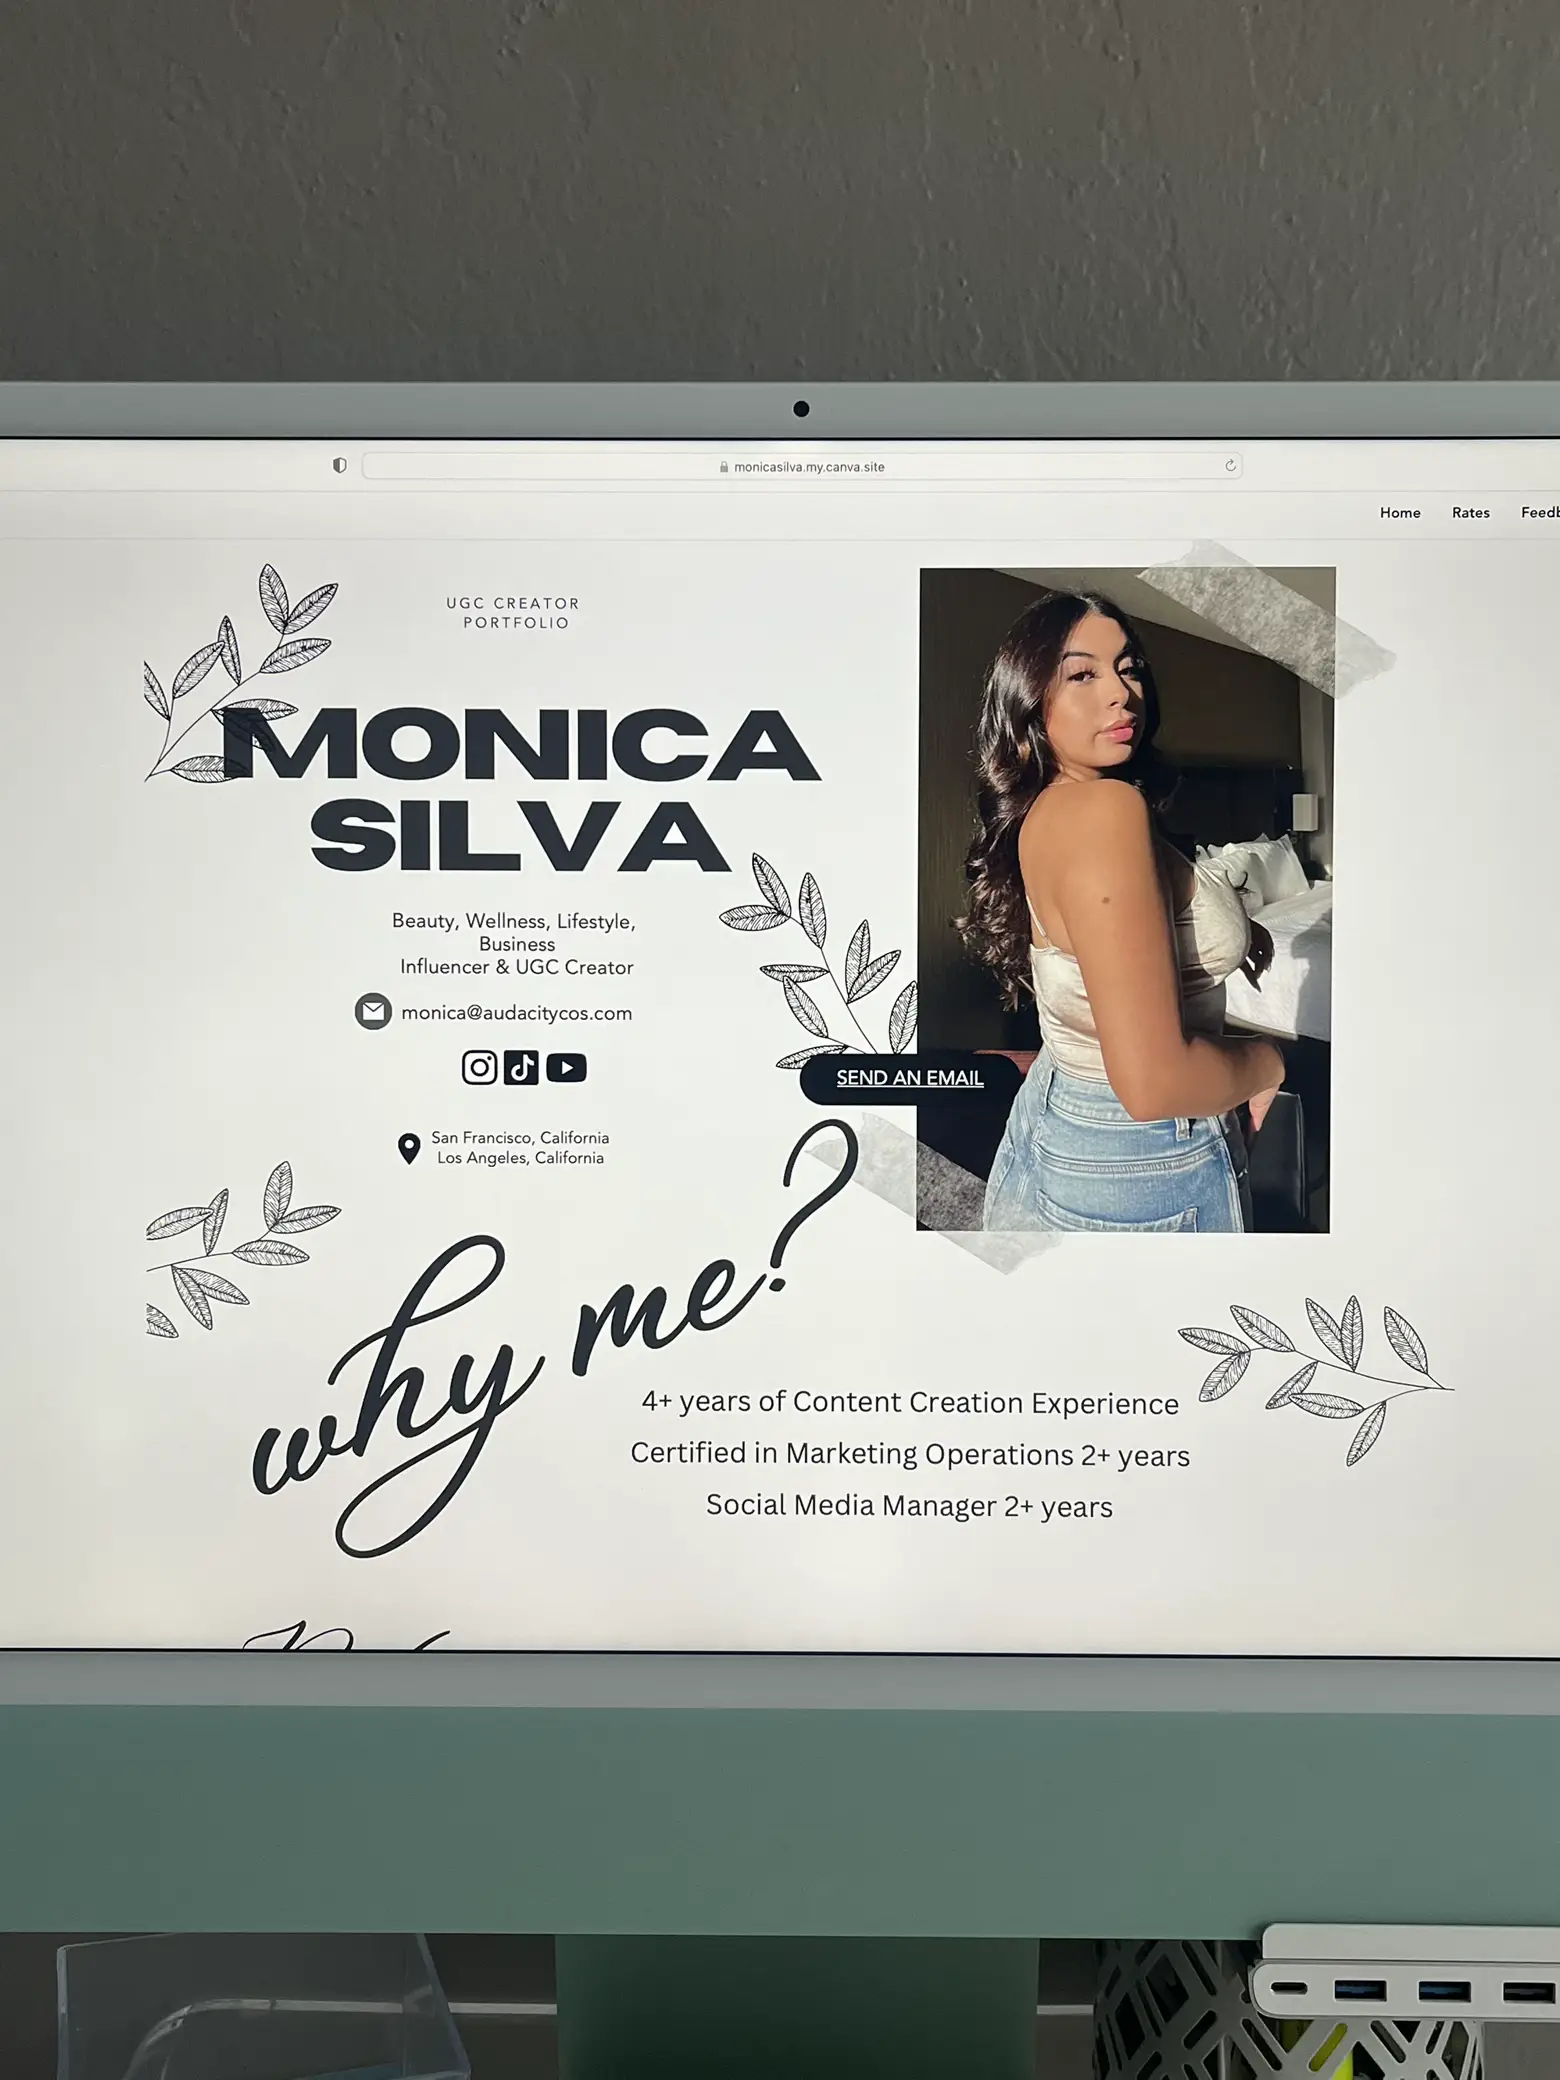  A website for Monica Silva Beauty